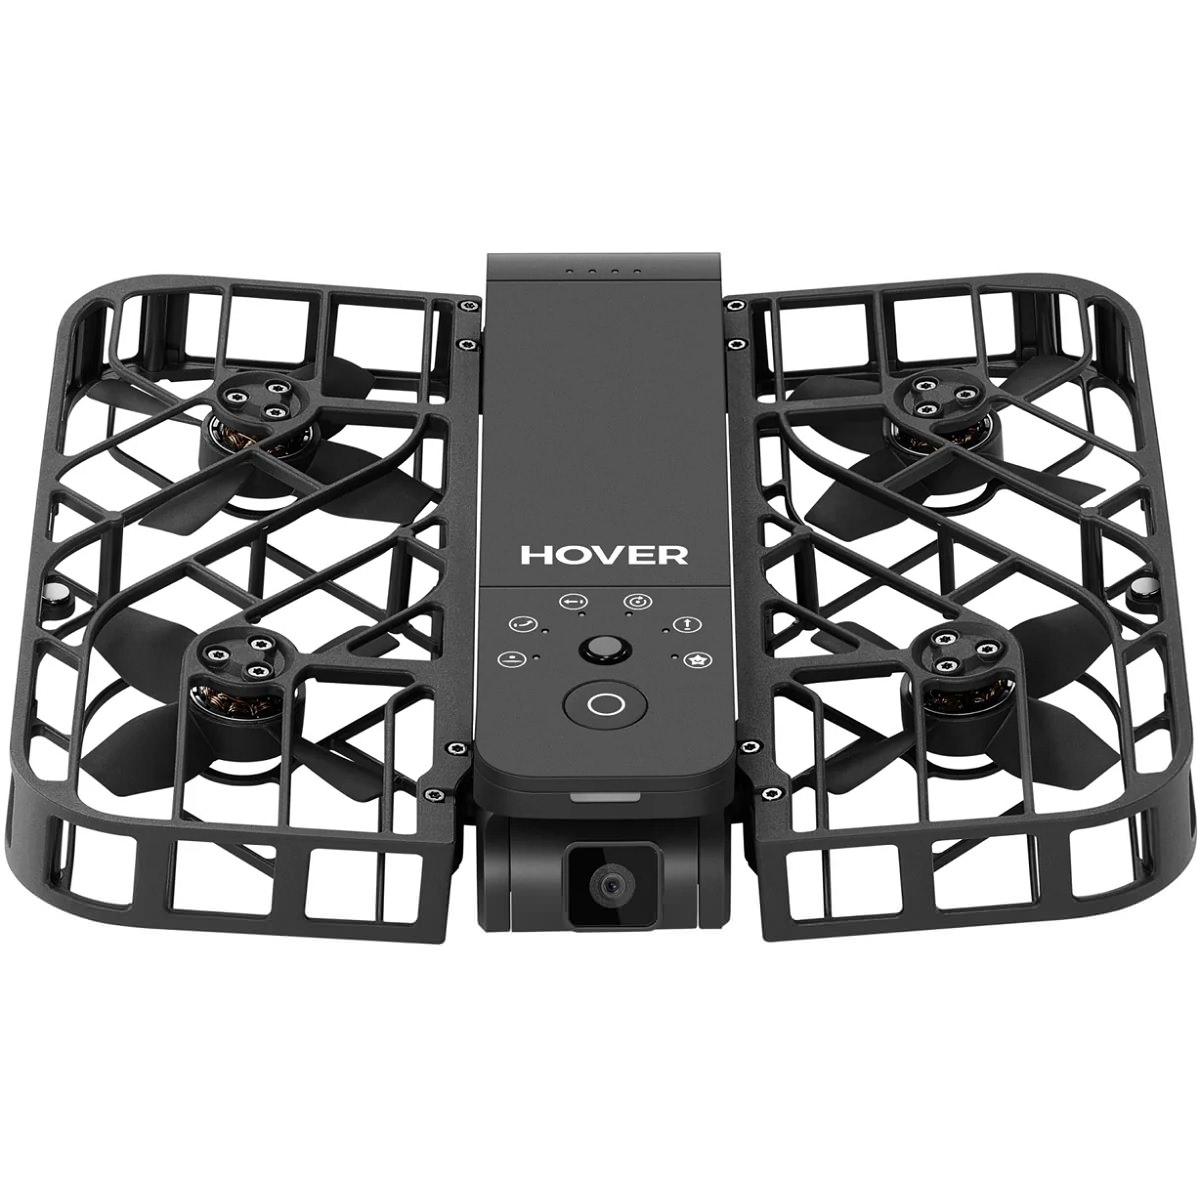 HoverAir X1 Pocket-Sized Self-Flying Camera【Combo Set】 - Sogo